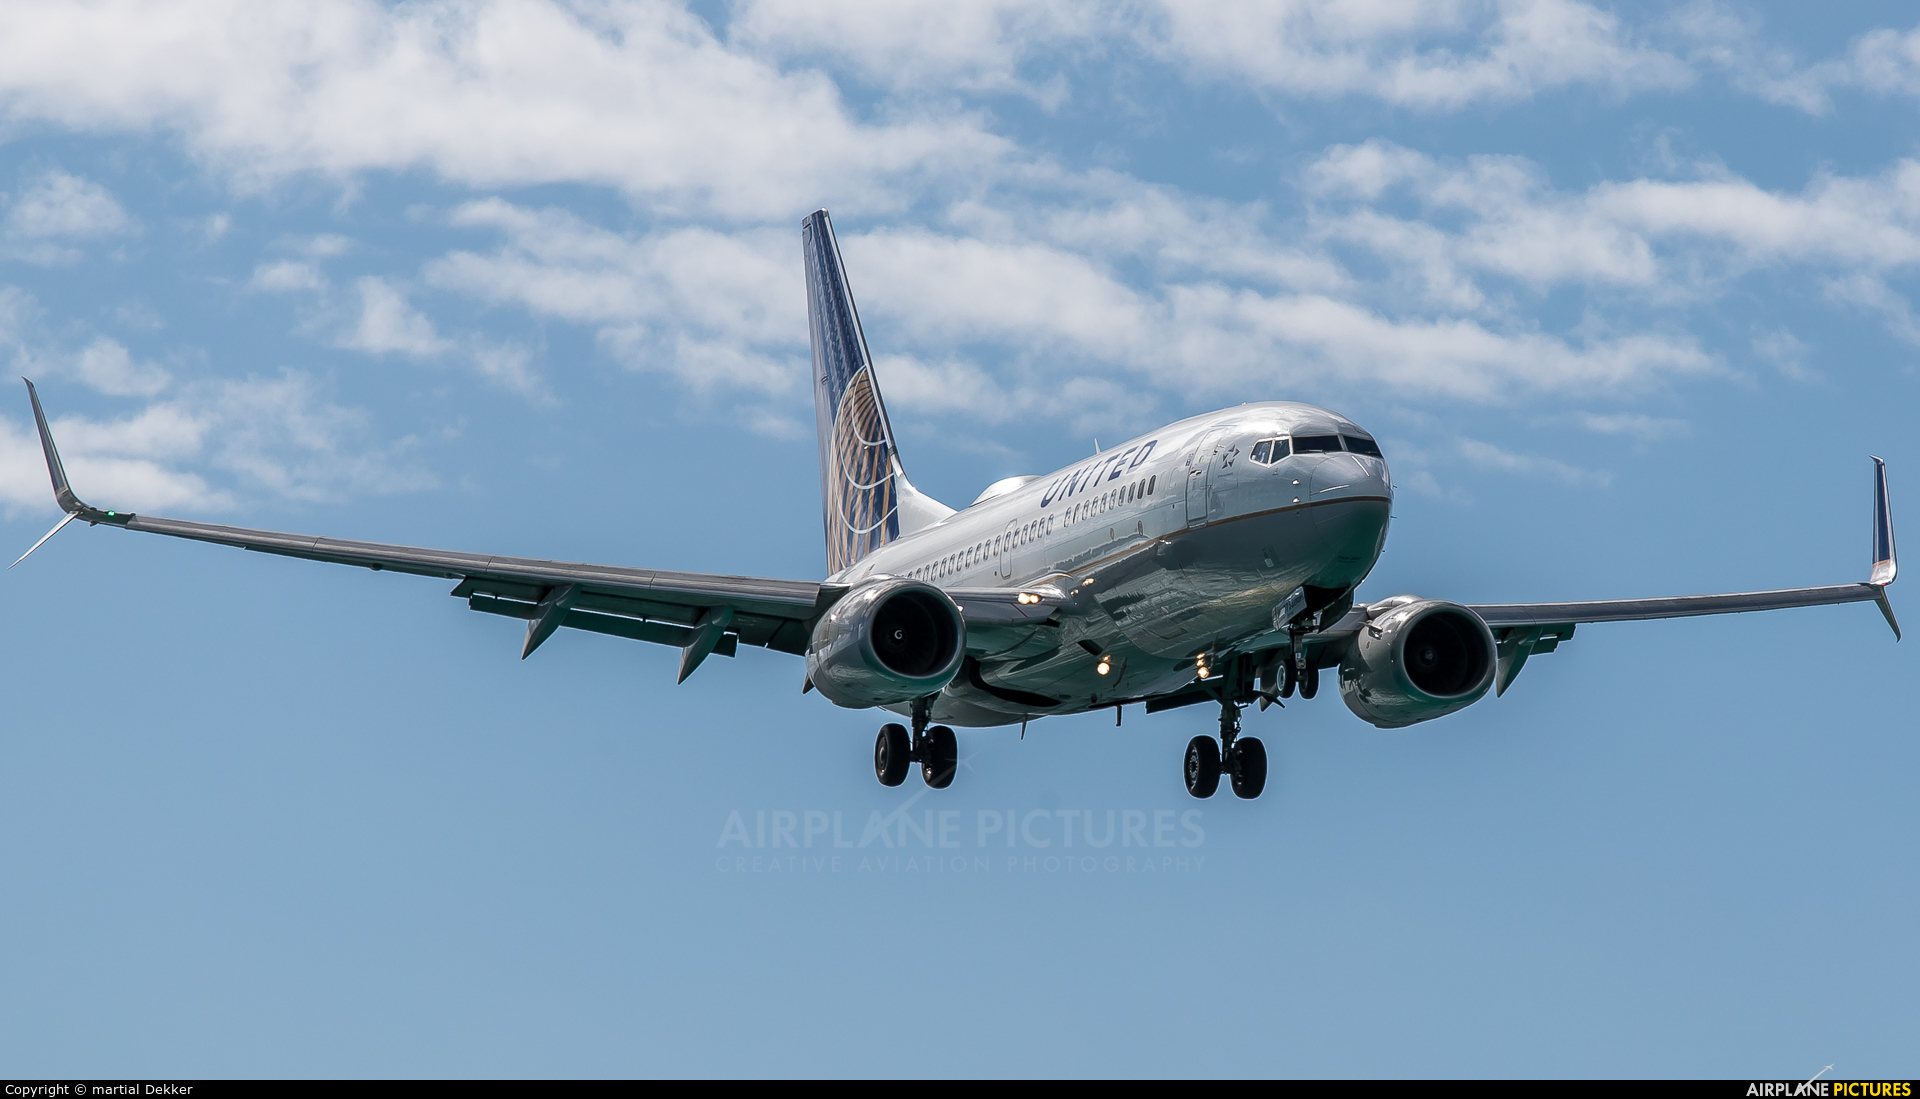 United Airlines N17753 aircraft at Sint Maarten - Princess Juliana Intl